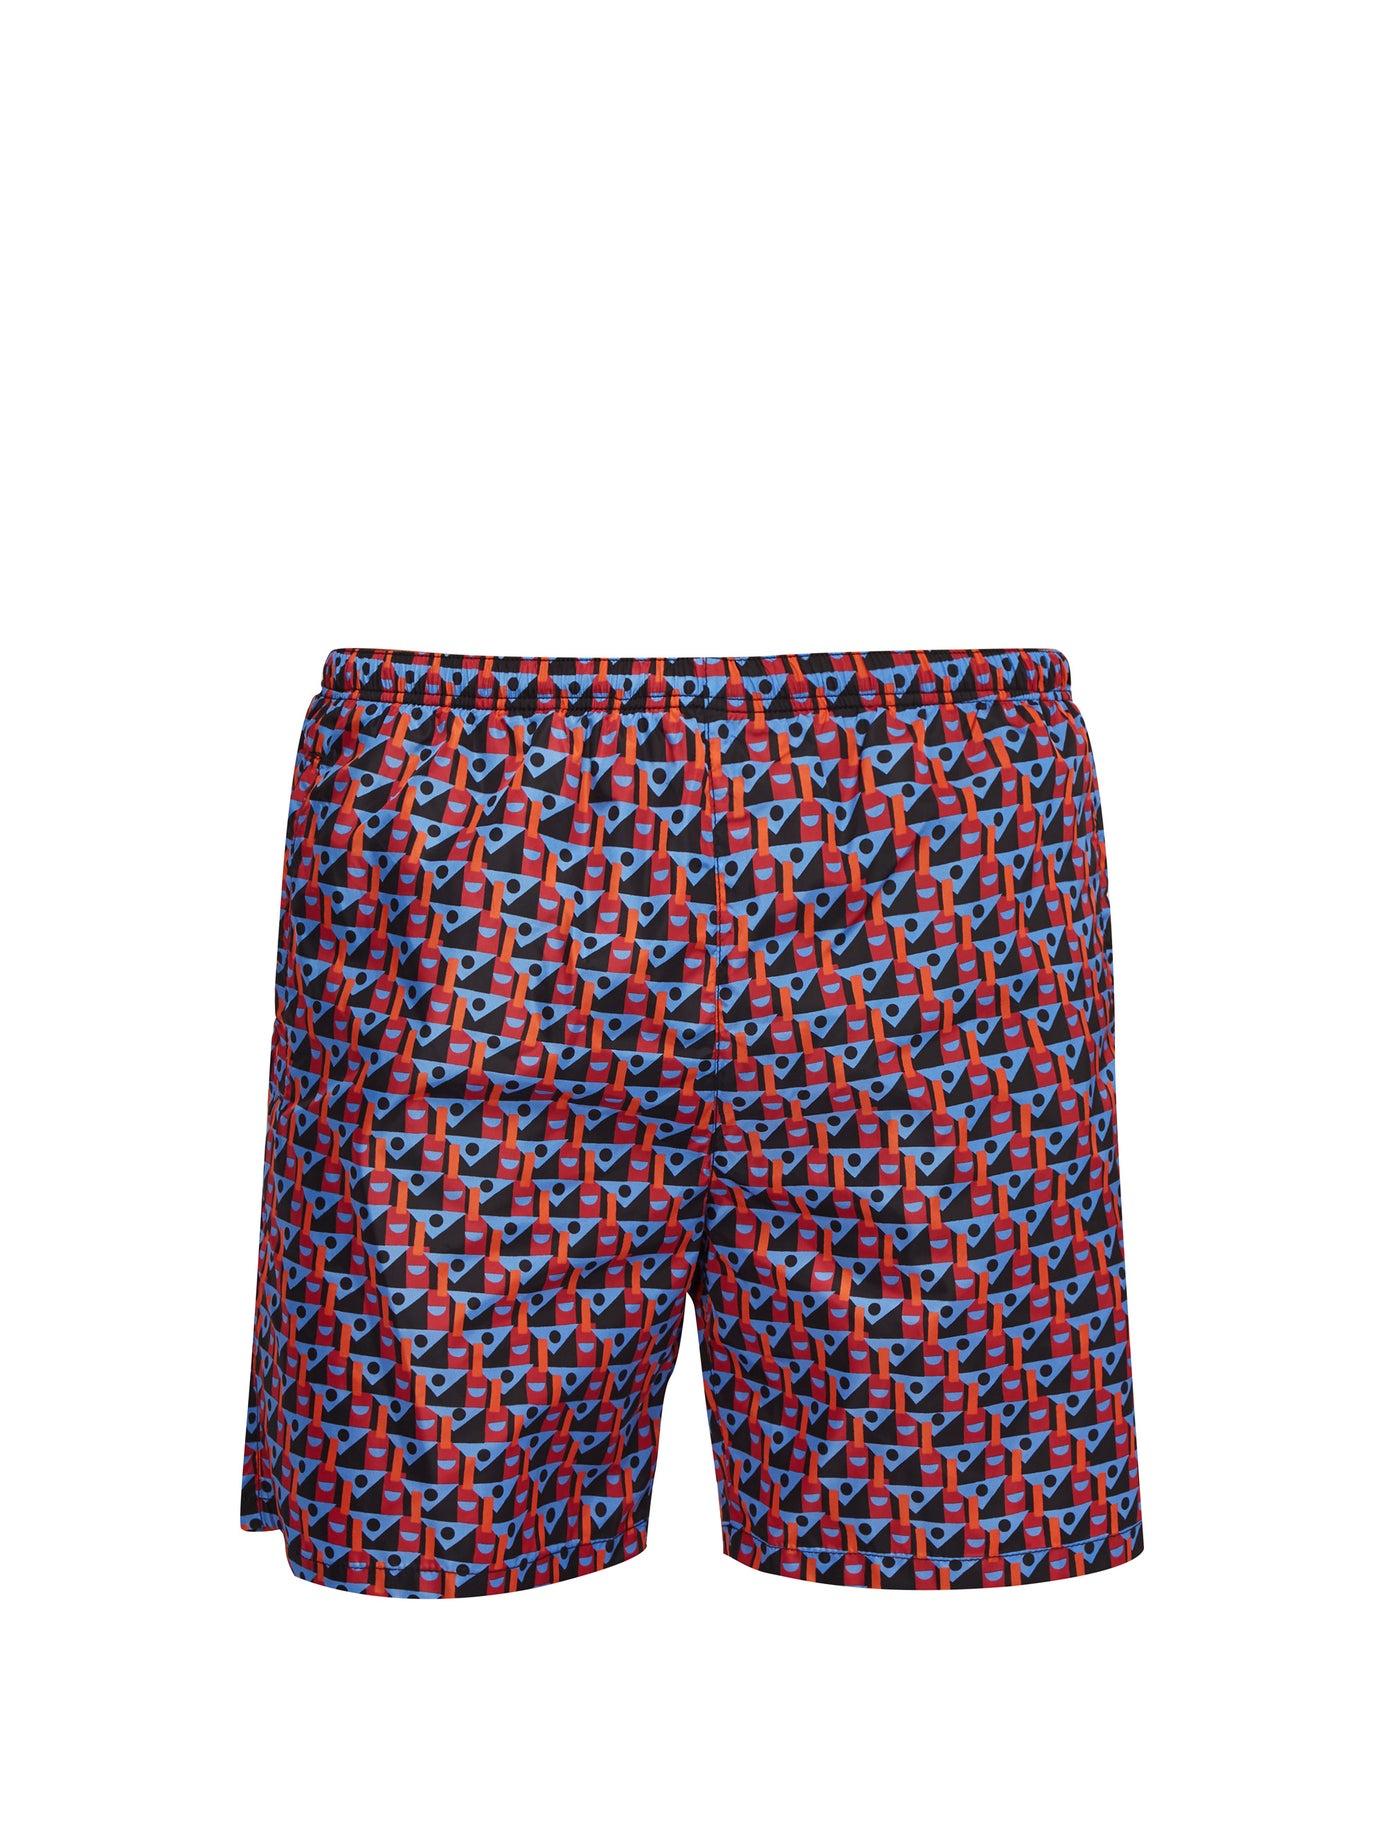 Prada Synthetic Geometric Print Swim Shorts in Blue for Men - Save 17% ...